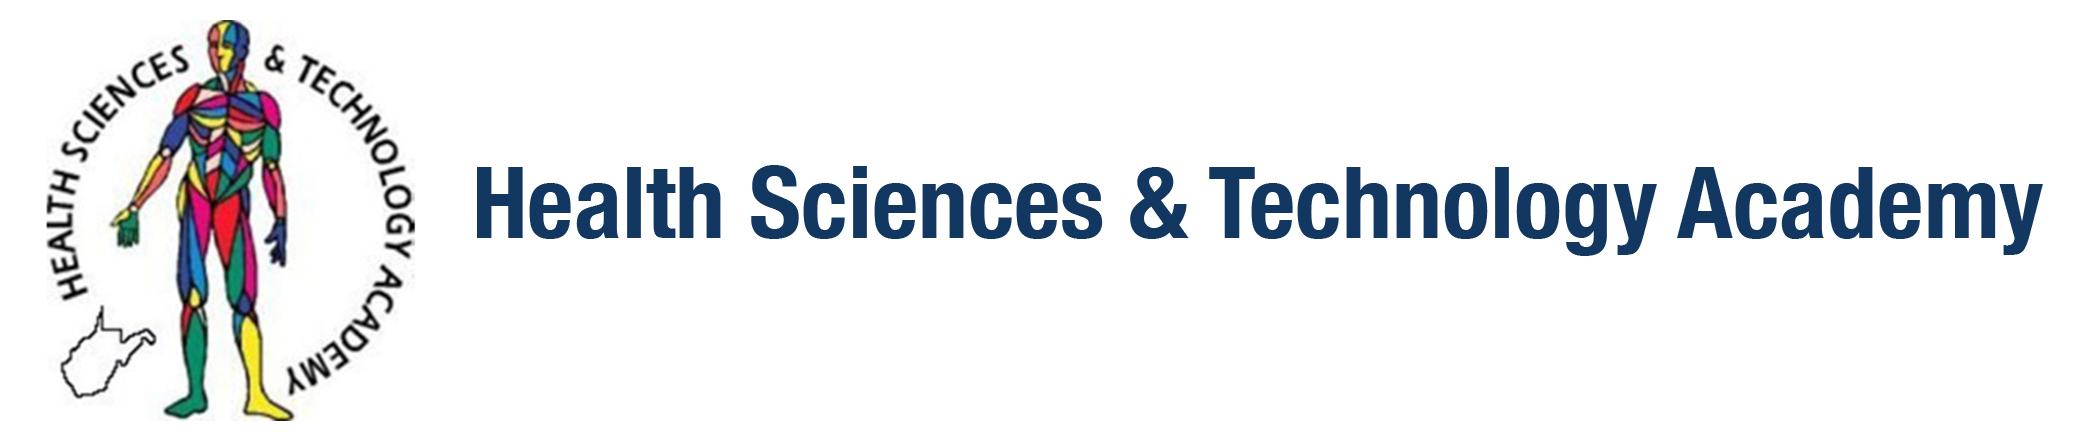 Health Sciences & Technology Academy logo